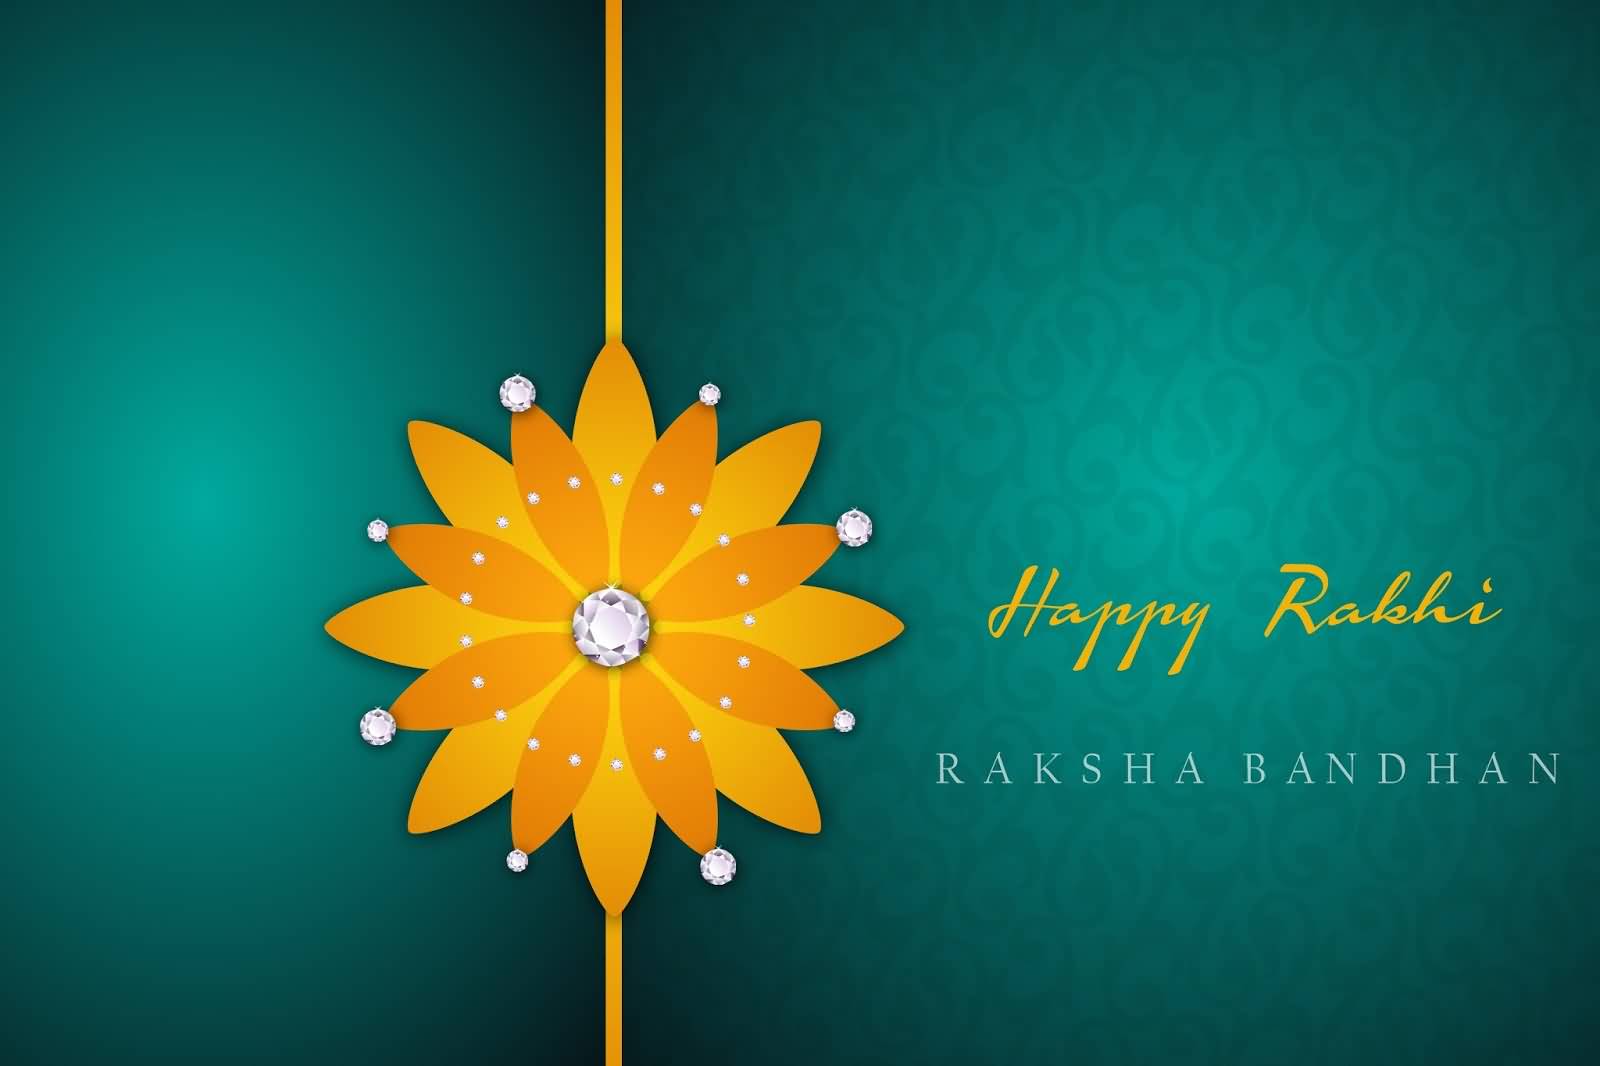 Best Happy Raksha Bandhan 2017 Image And Photo